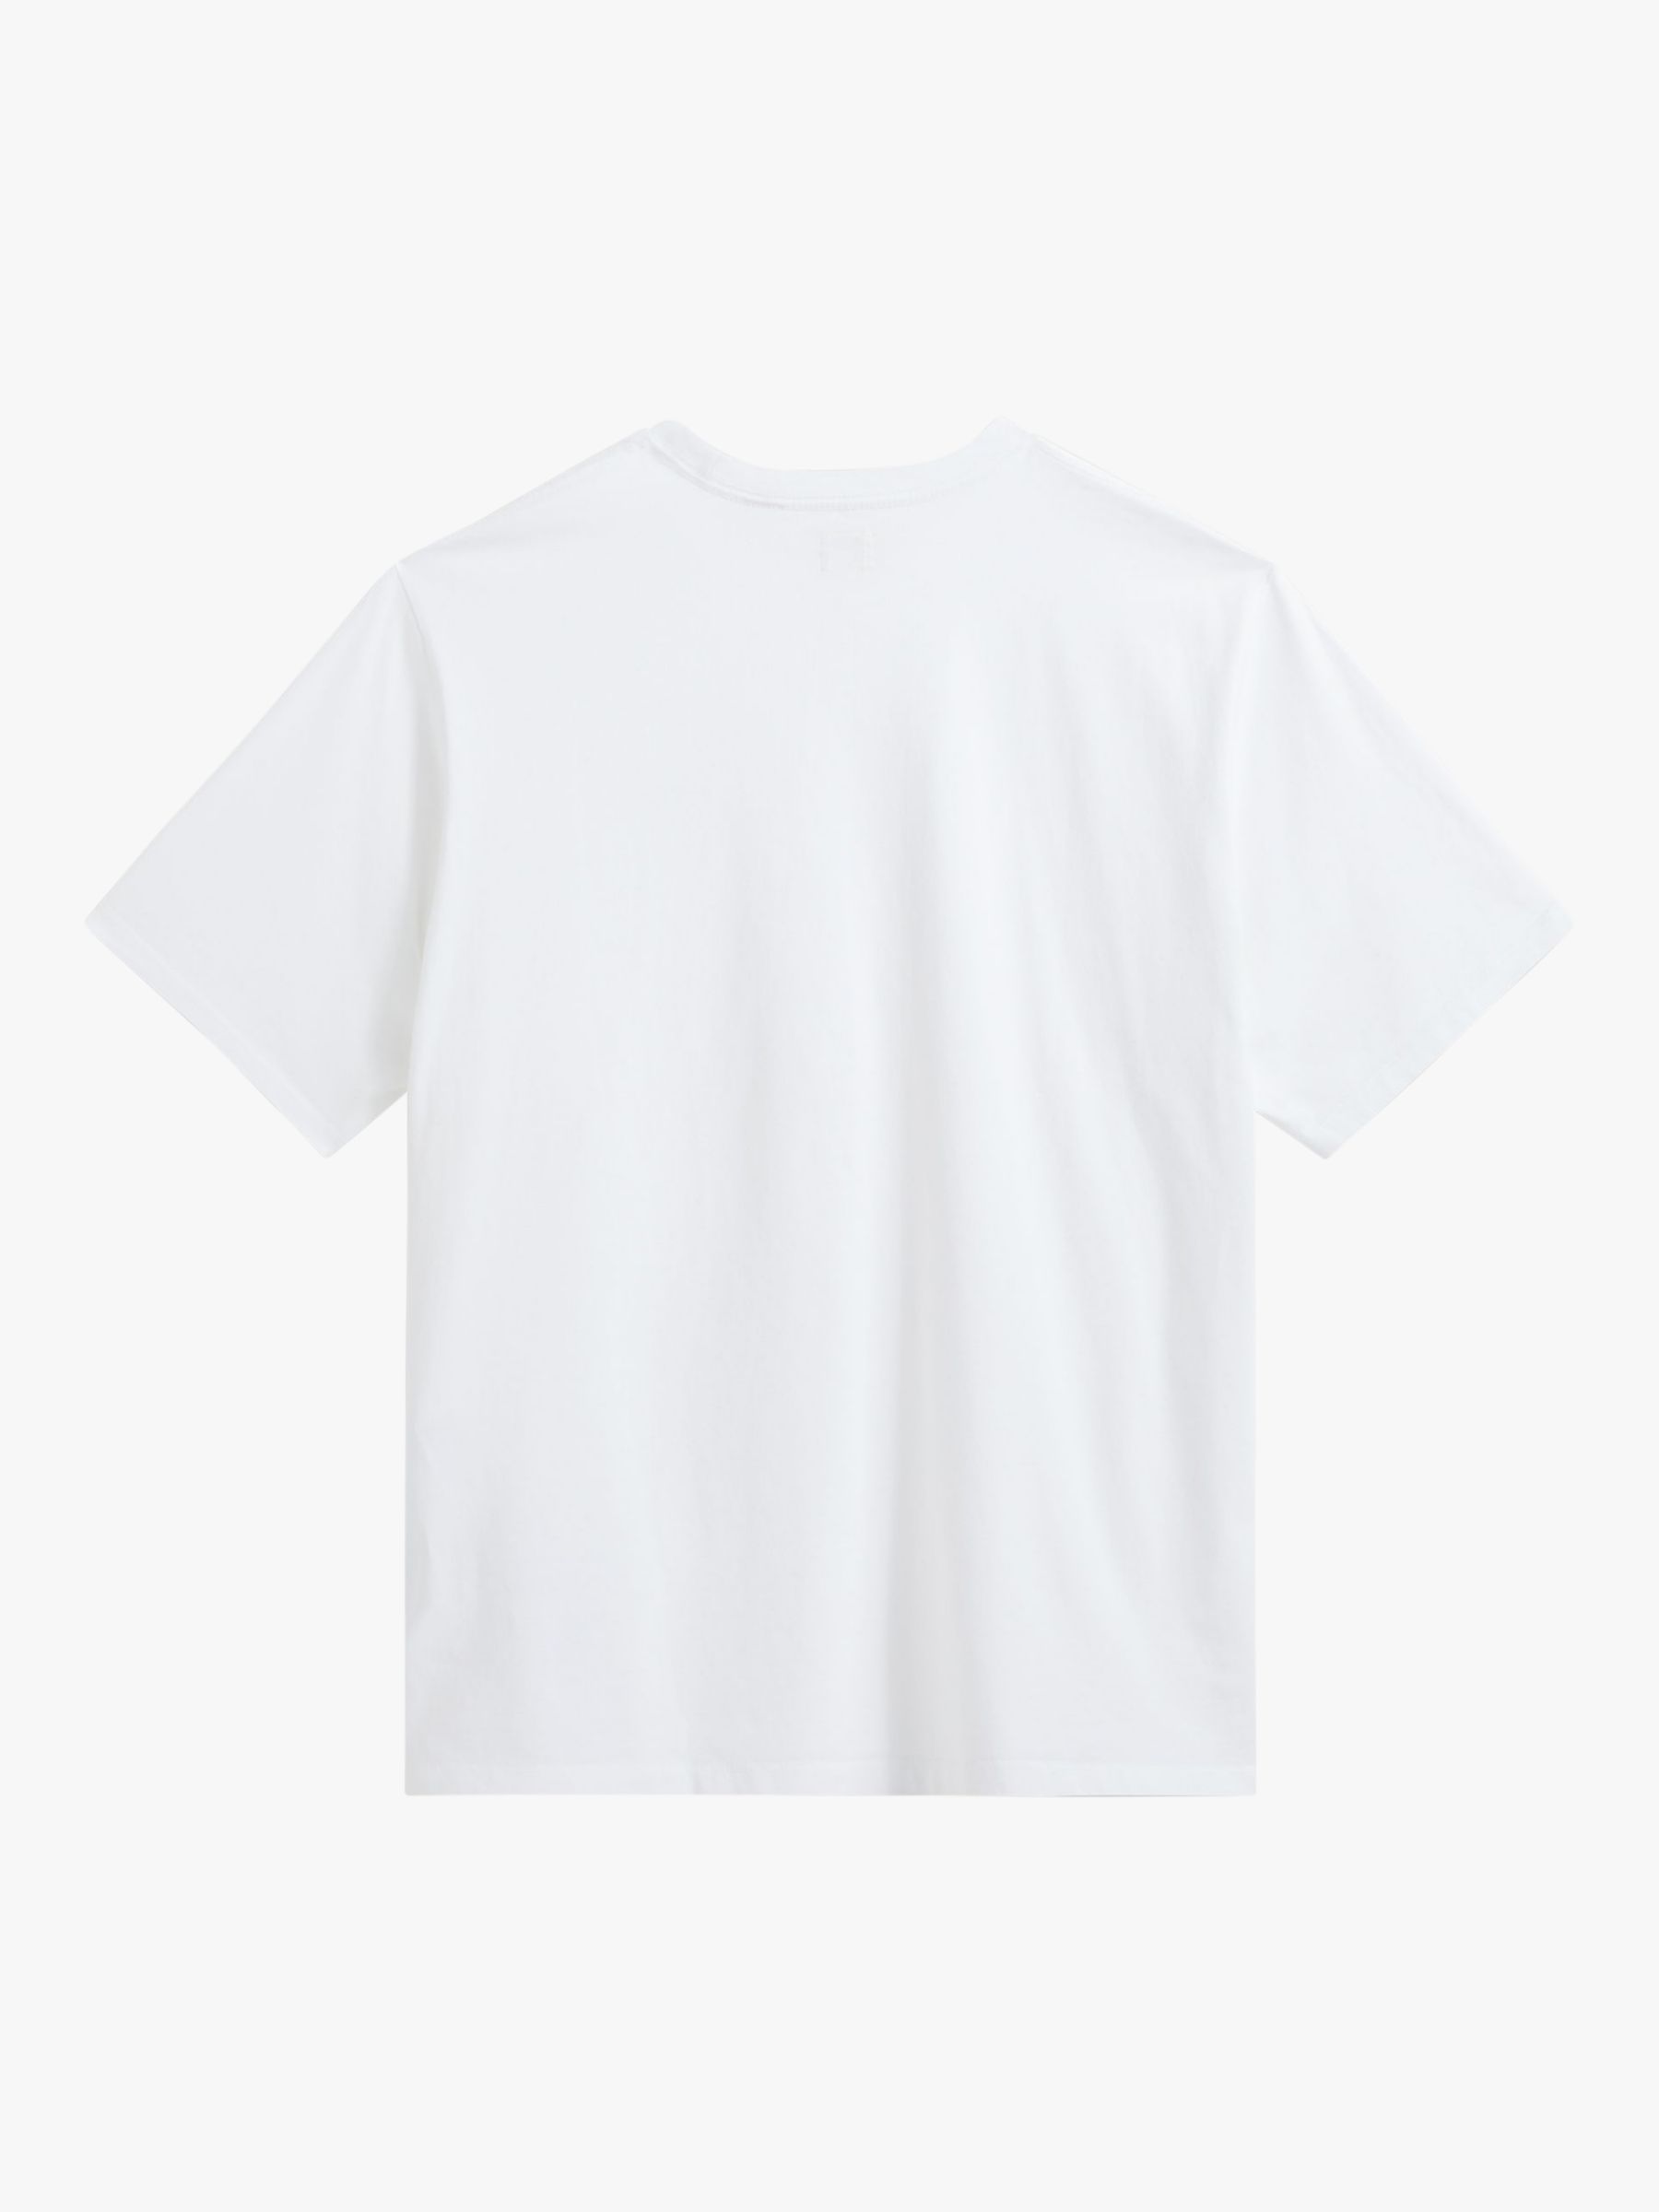 Levi's Big & Tall Original T-Shirt, White, 1XL